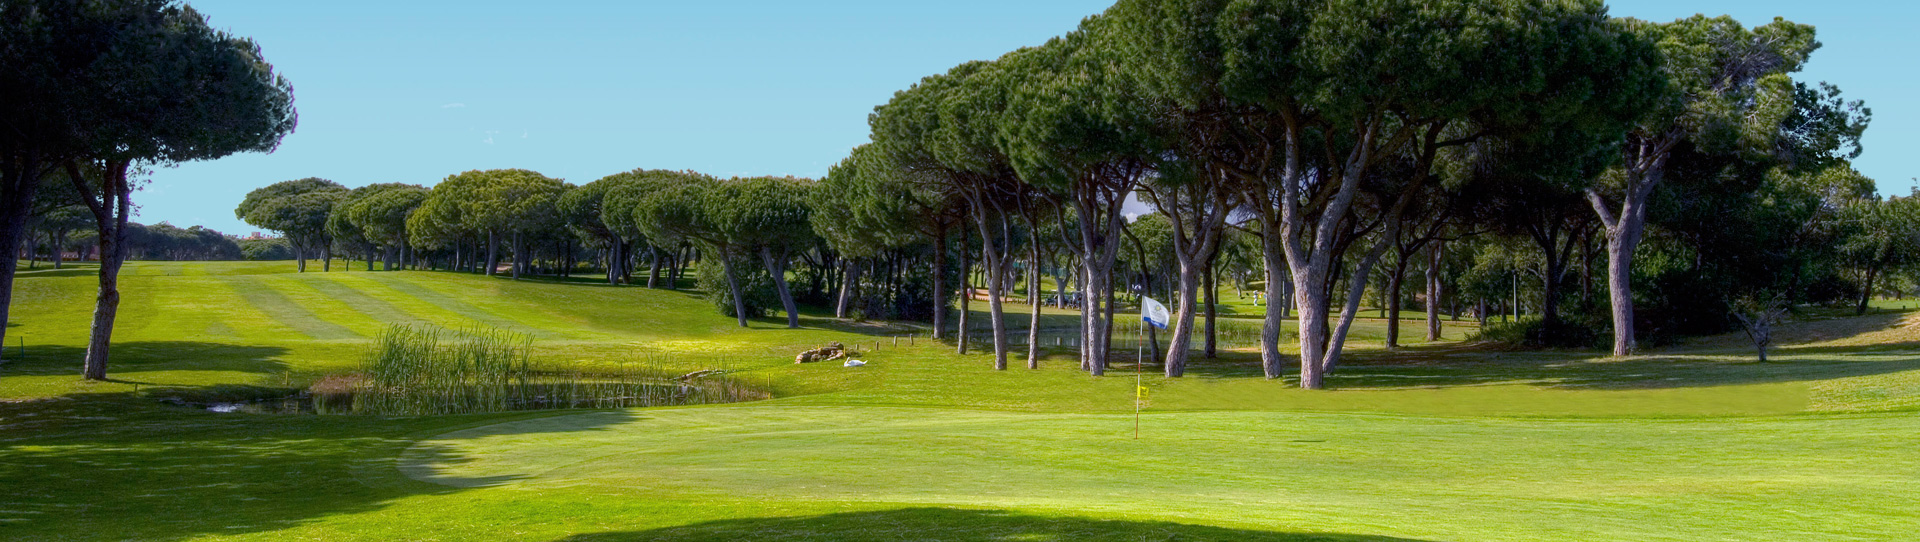 Portugal golf courses - Vila Sol Golf Course - Photo 1